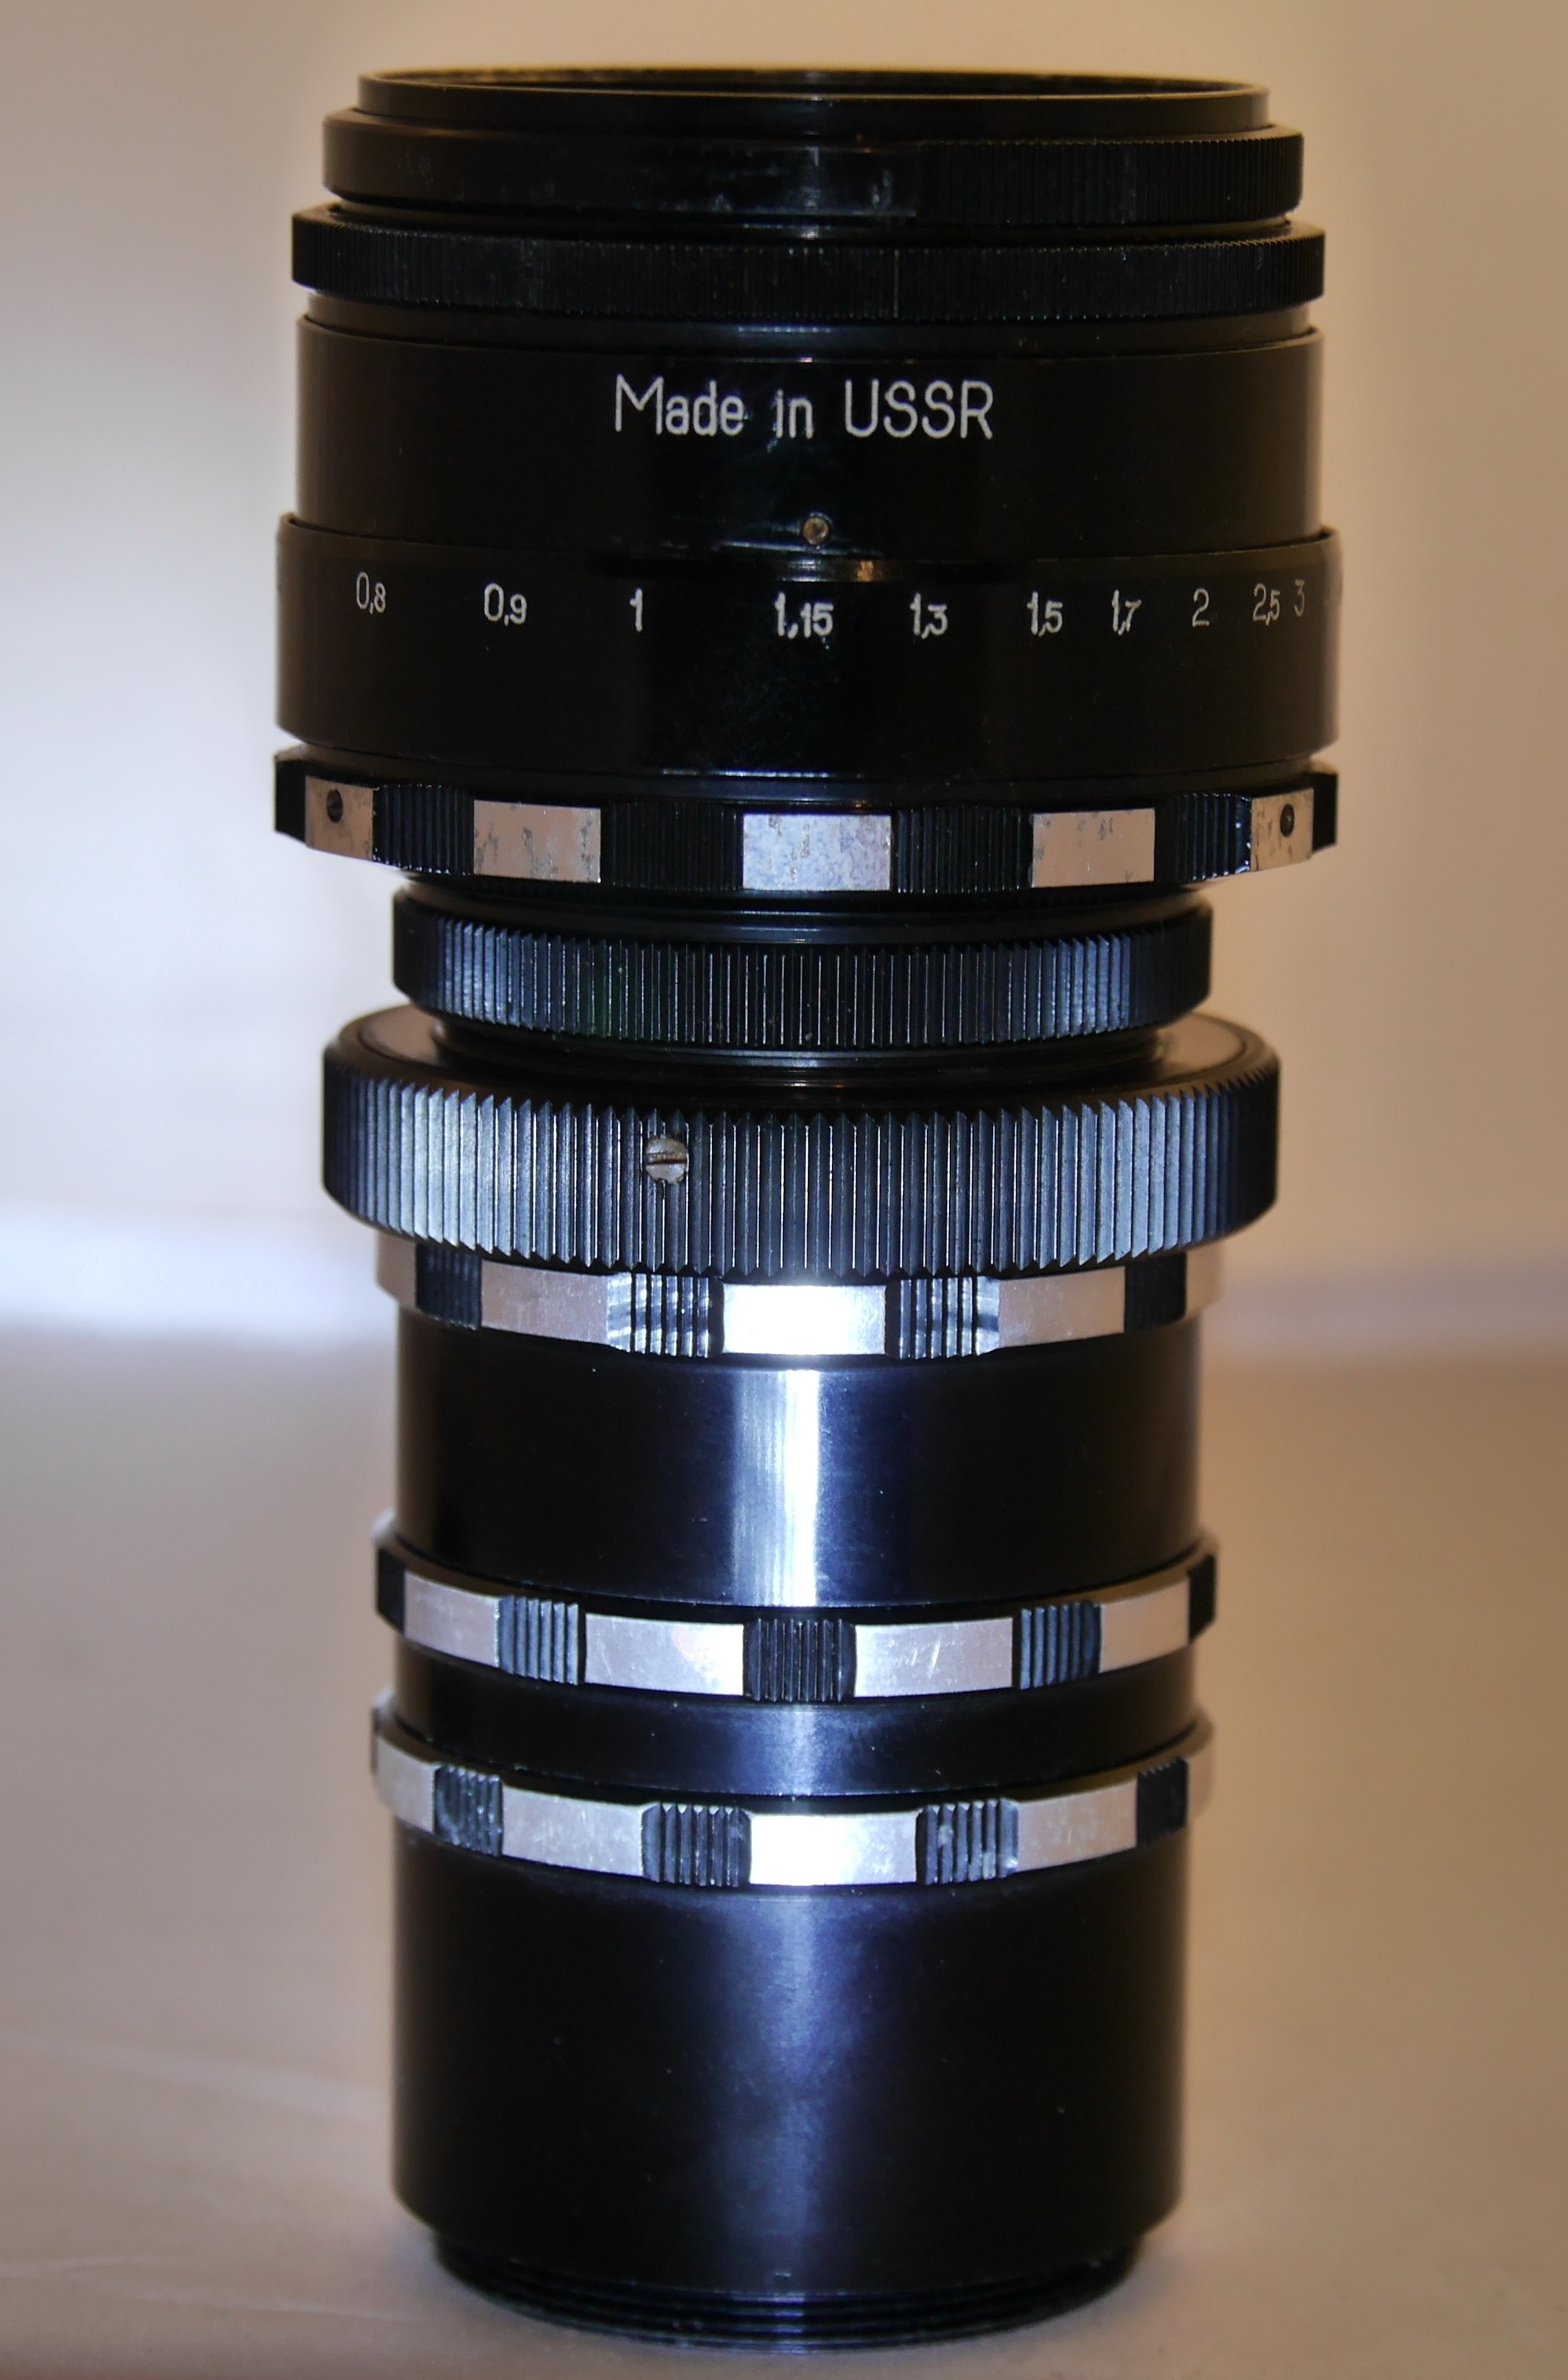 black made in ussr camera lens